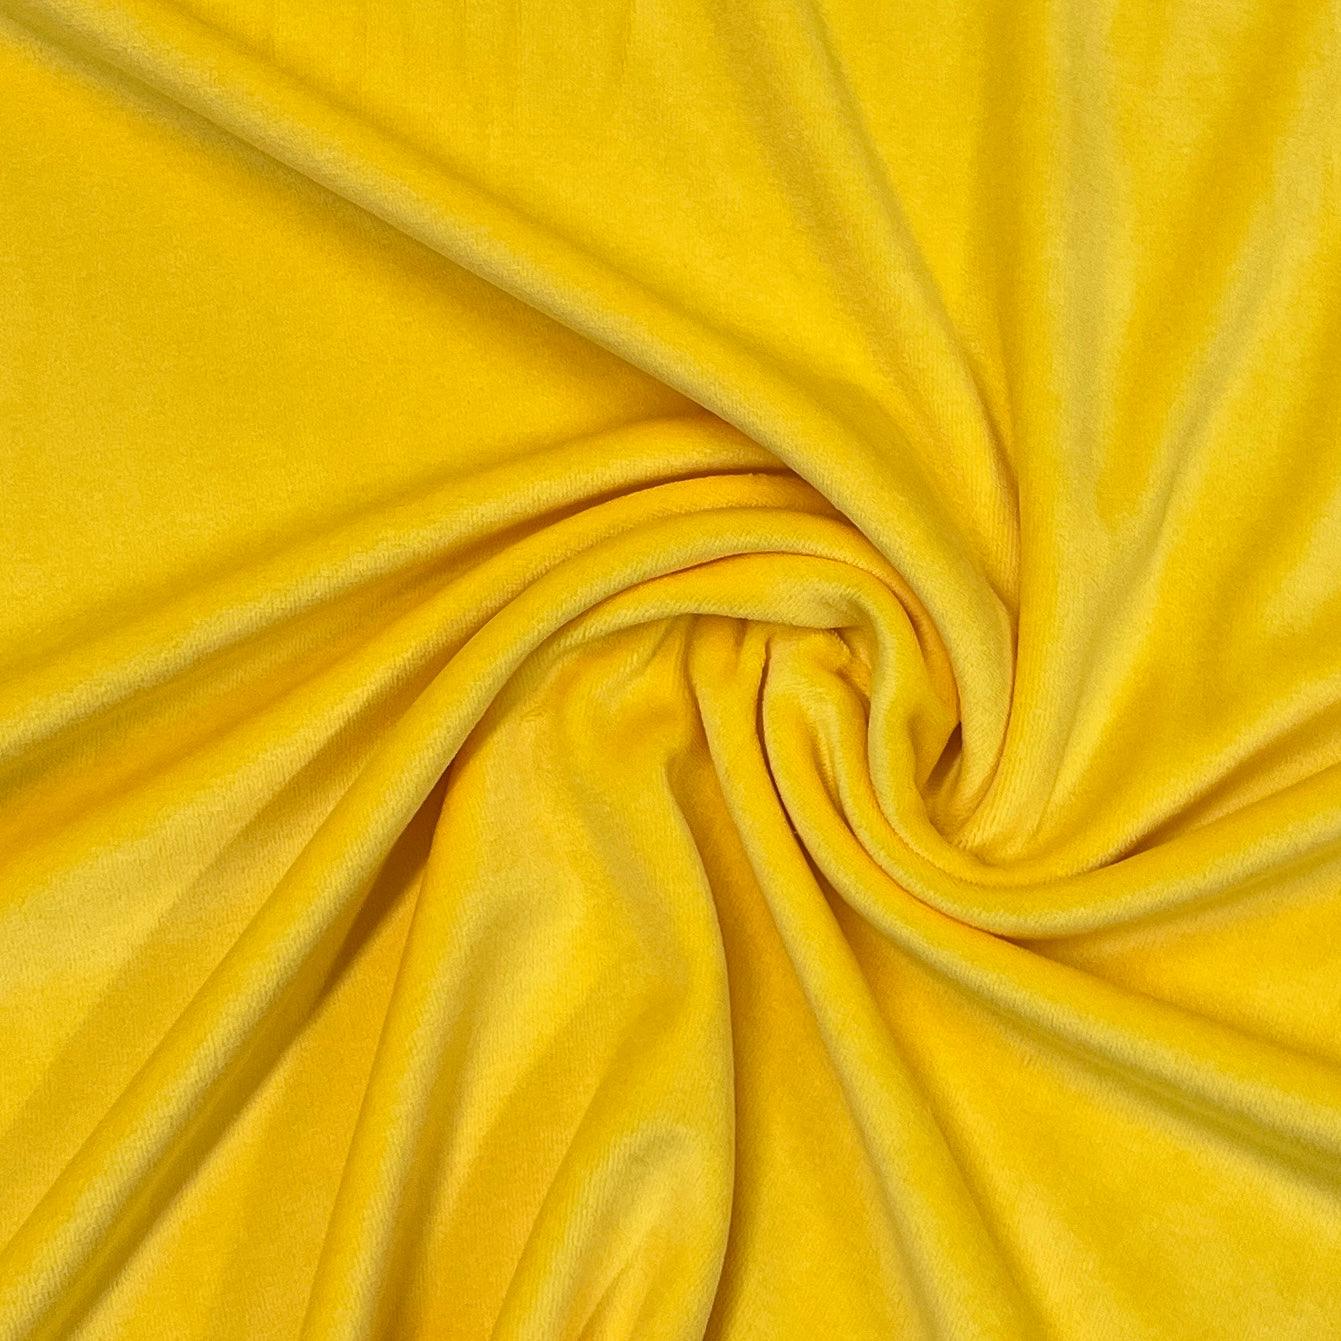 Eureka Gold Organic Cotton Velour Fabric, $10.59/yd, 15 yards - Nature's Fabrics